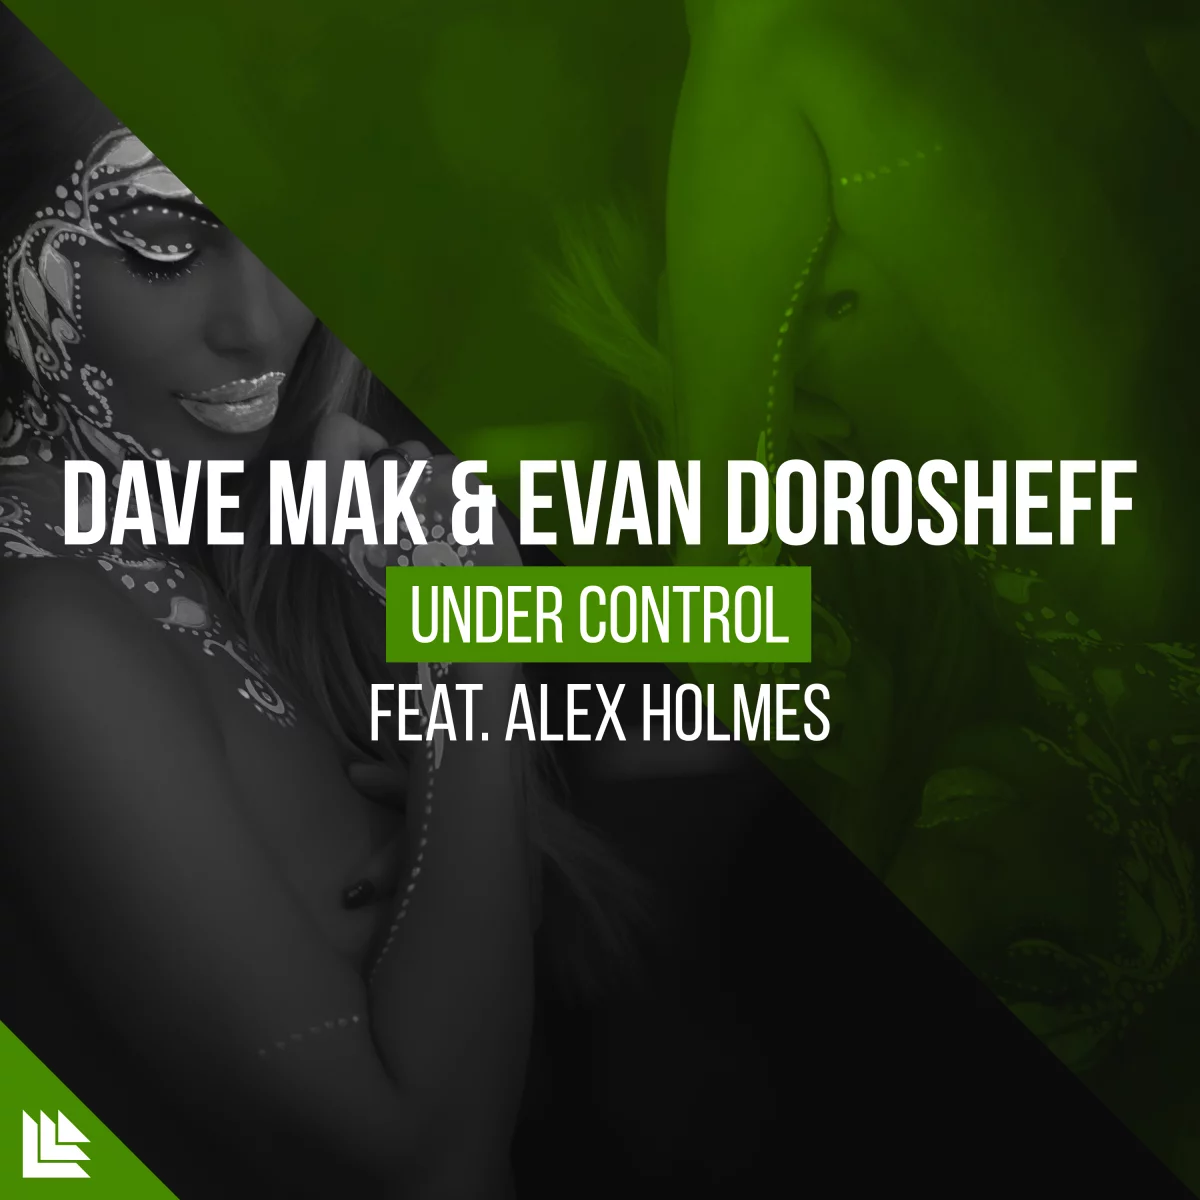 Under Control - Dave Mak⁠ & Evan Dorosheff⁠ feat. Alex Holmes⁠ 